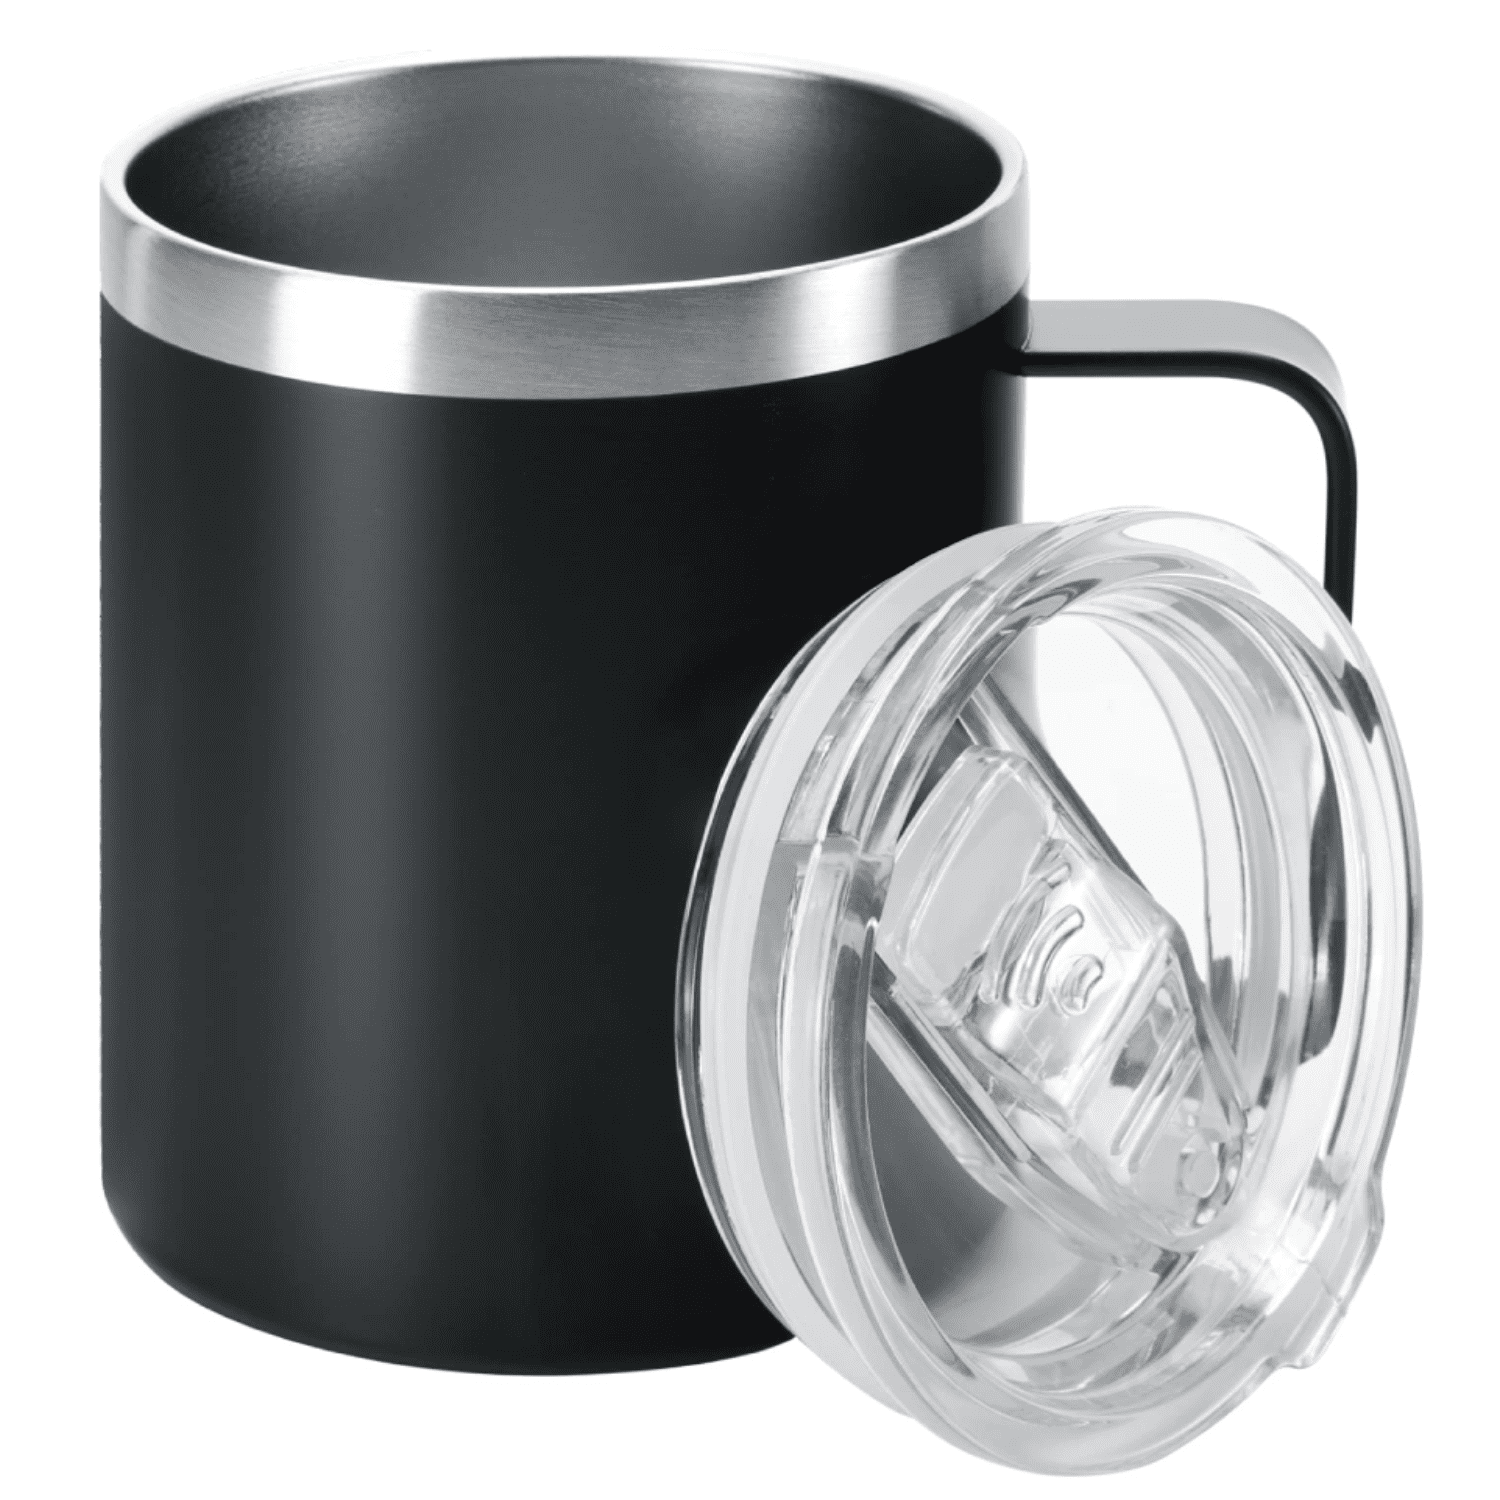 EcoVessel Transit Stainless Steel Travel Mug/Coffee Mug with Slider Lid & Ergonomic Handle, Tumbler with Handle Insulated Coffee Mug - 12oz (Ombre